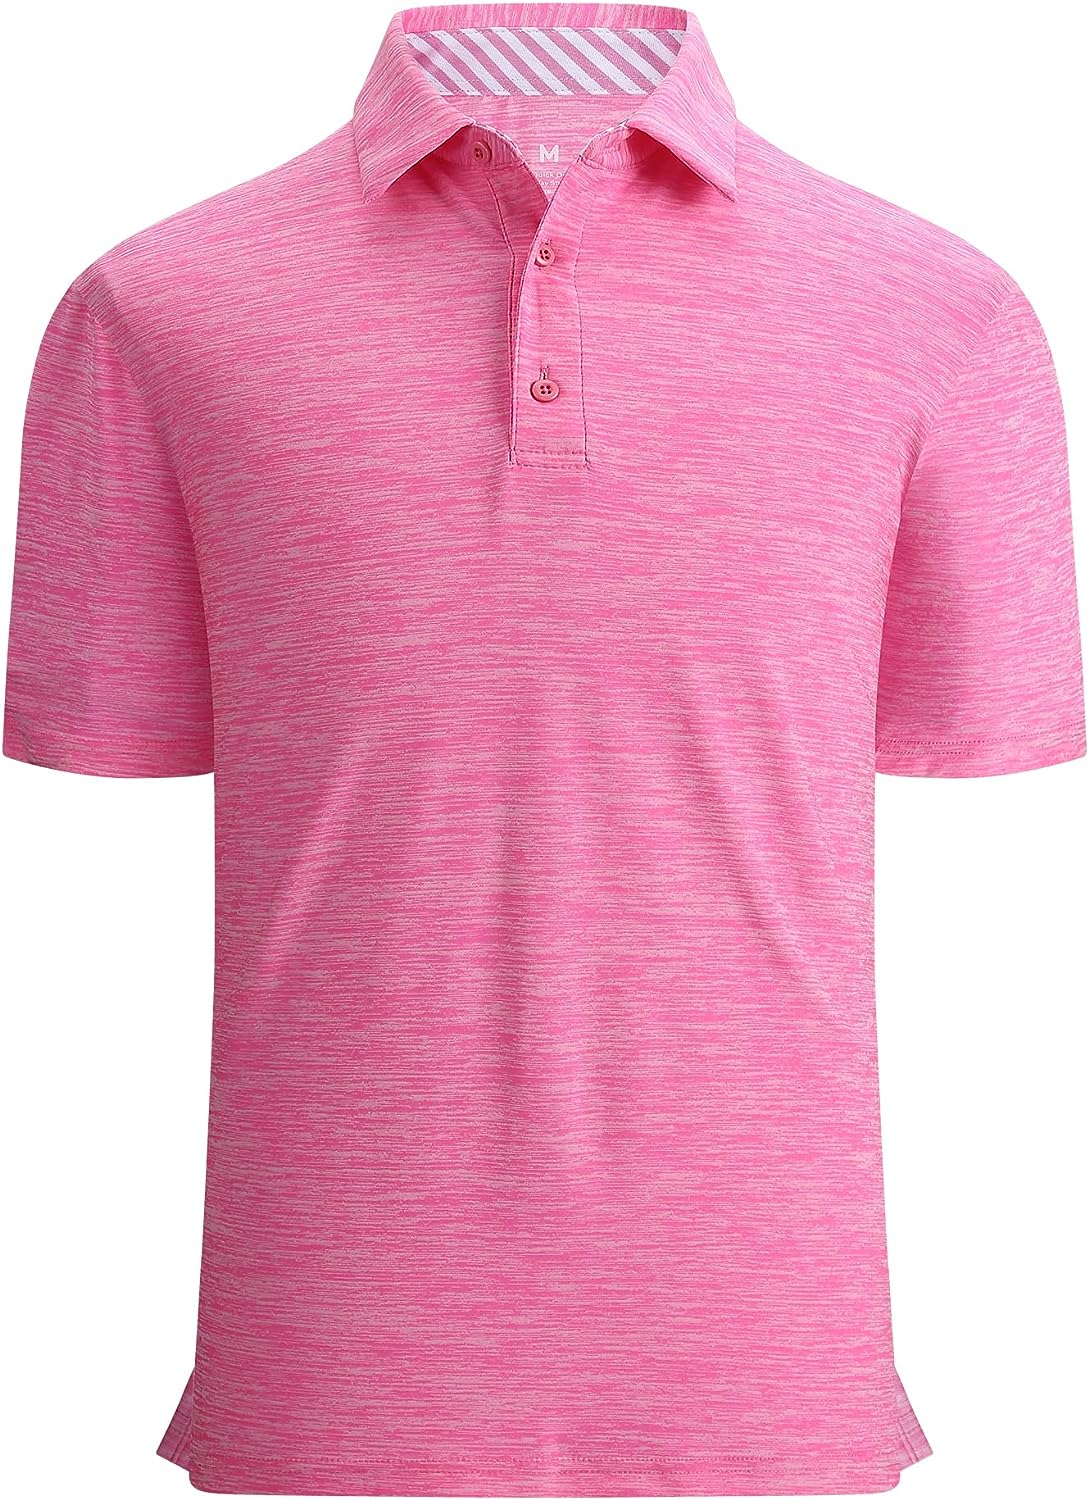 Alex Vando Mens Golf Shirt Moisture Wicking Quick-Dry Short Sleeve ...